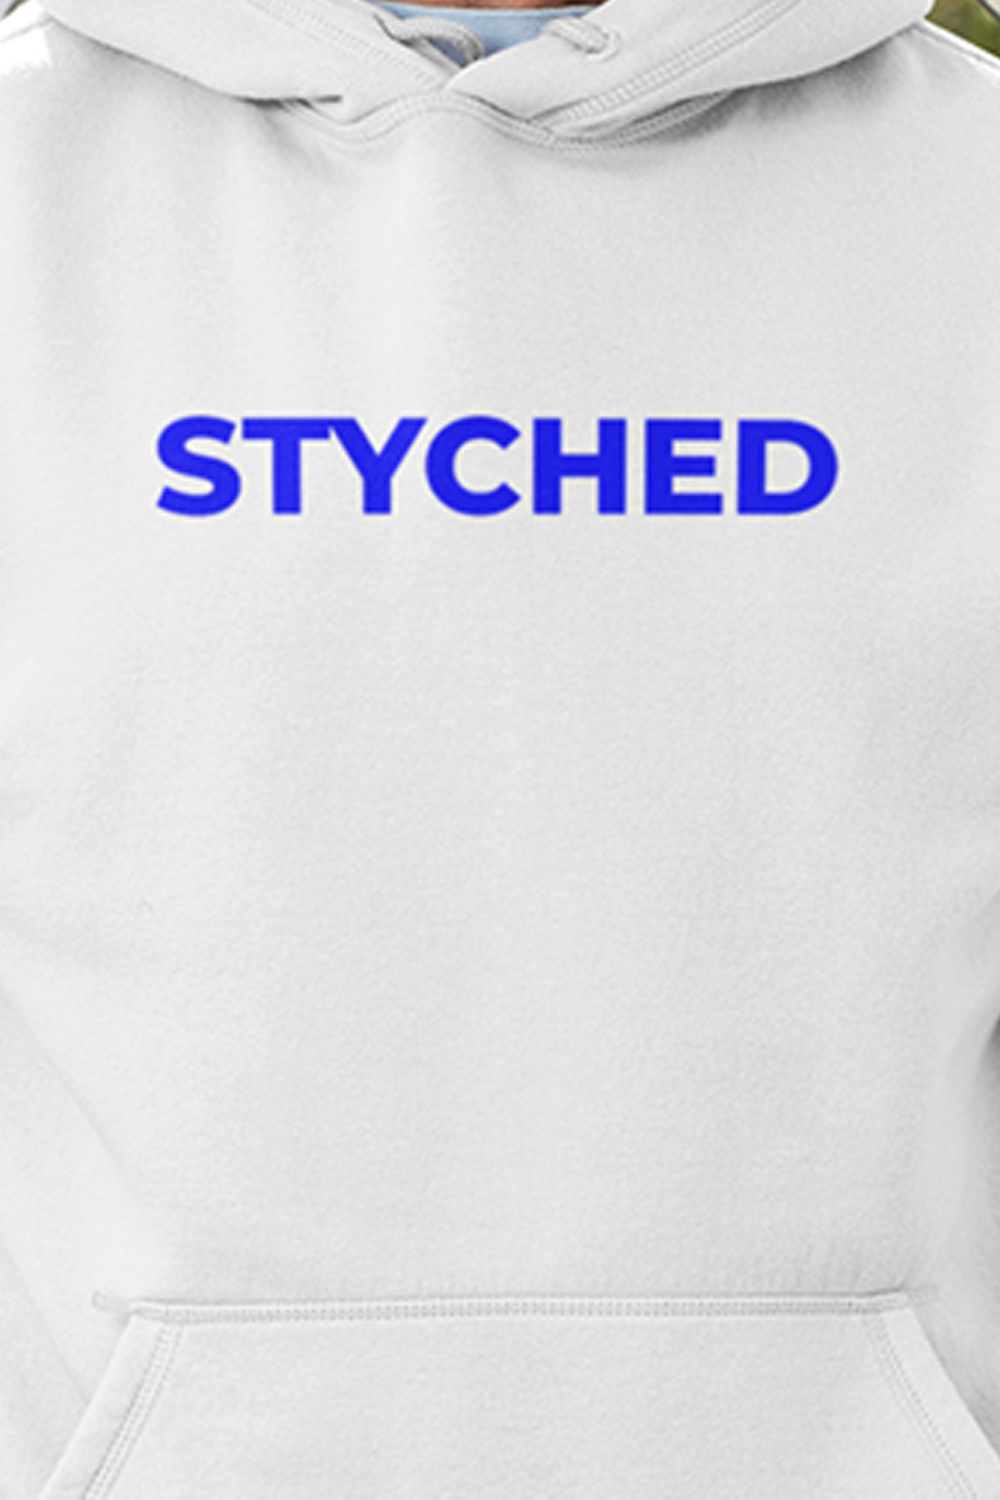 Blue Styched Print Premium Non Zipper White Hoodie